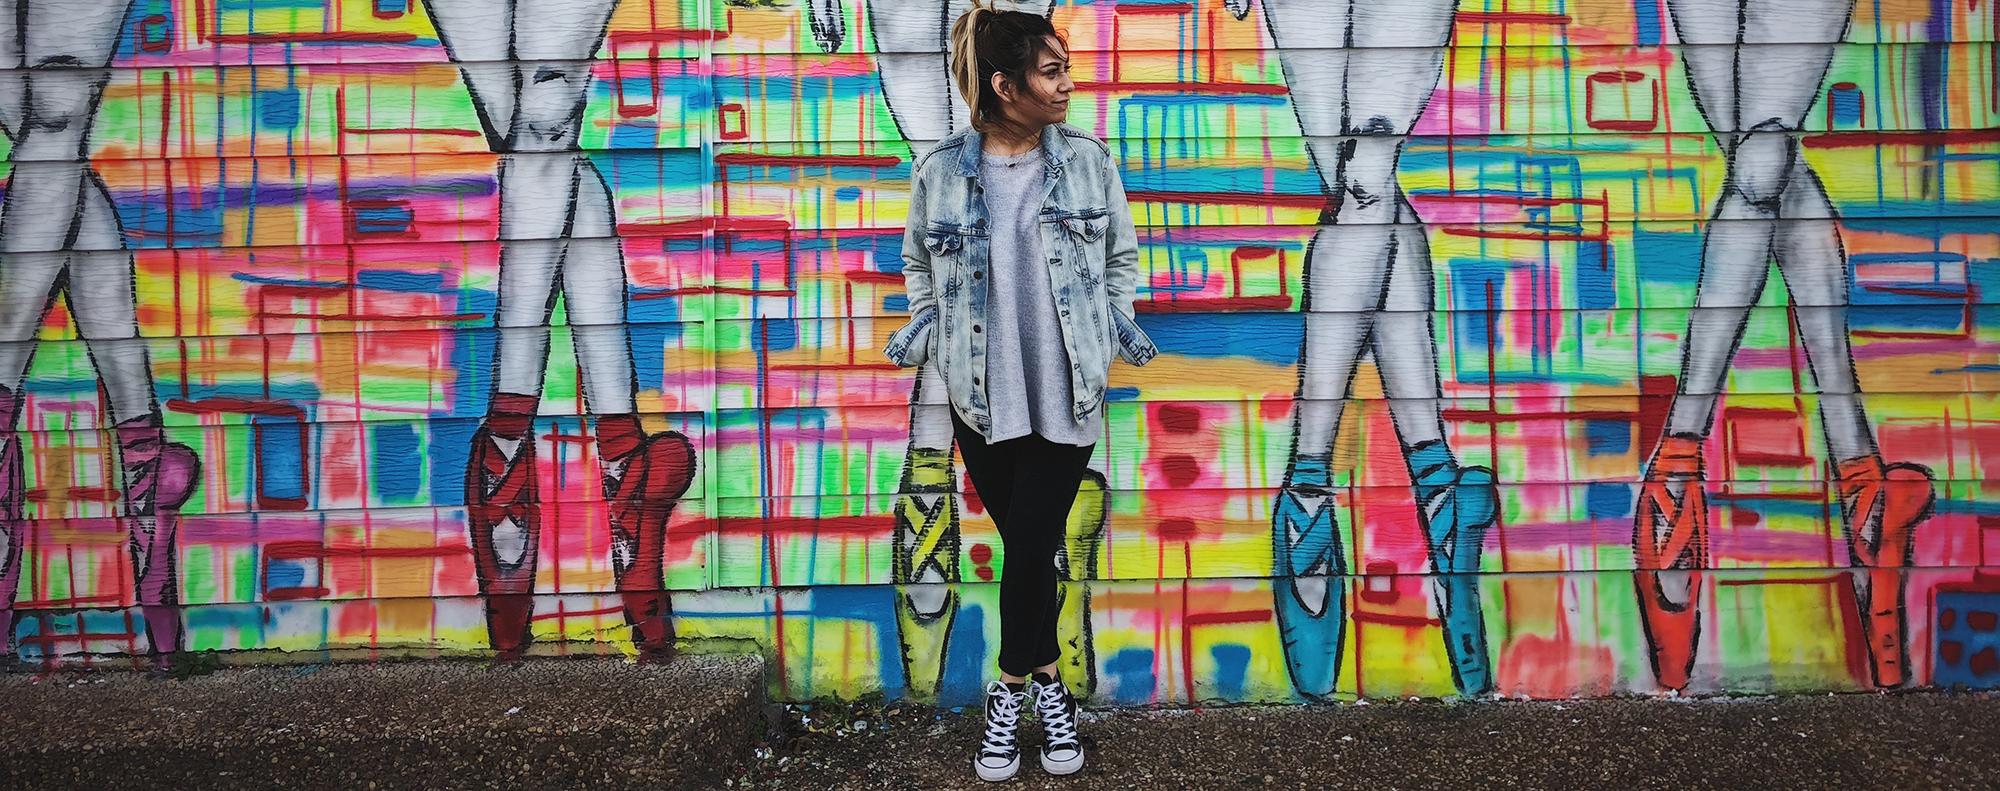 Woman standing against graffiti art